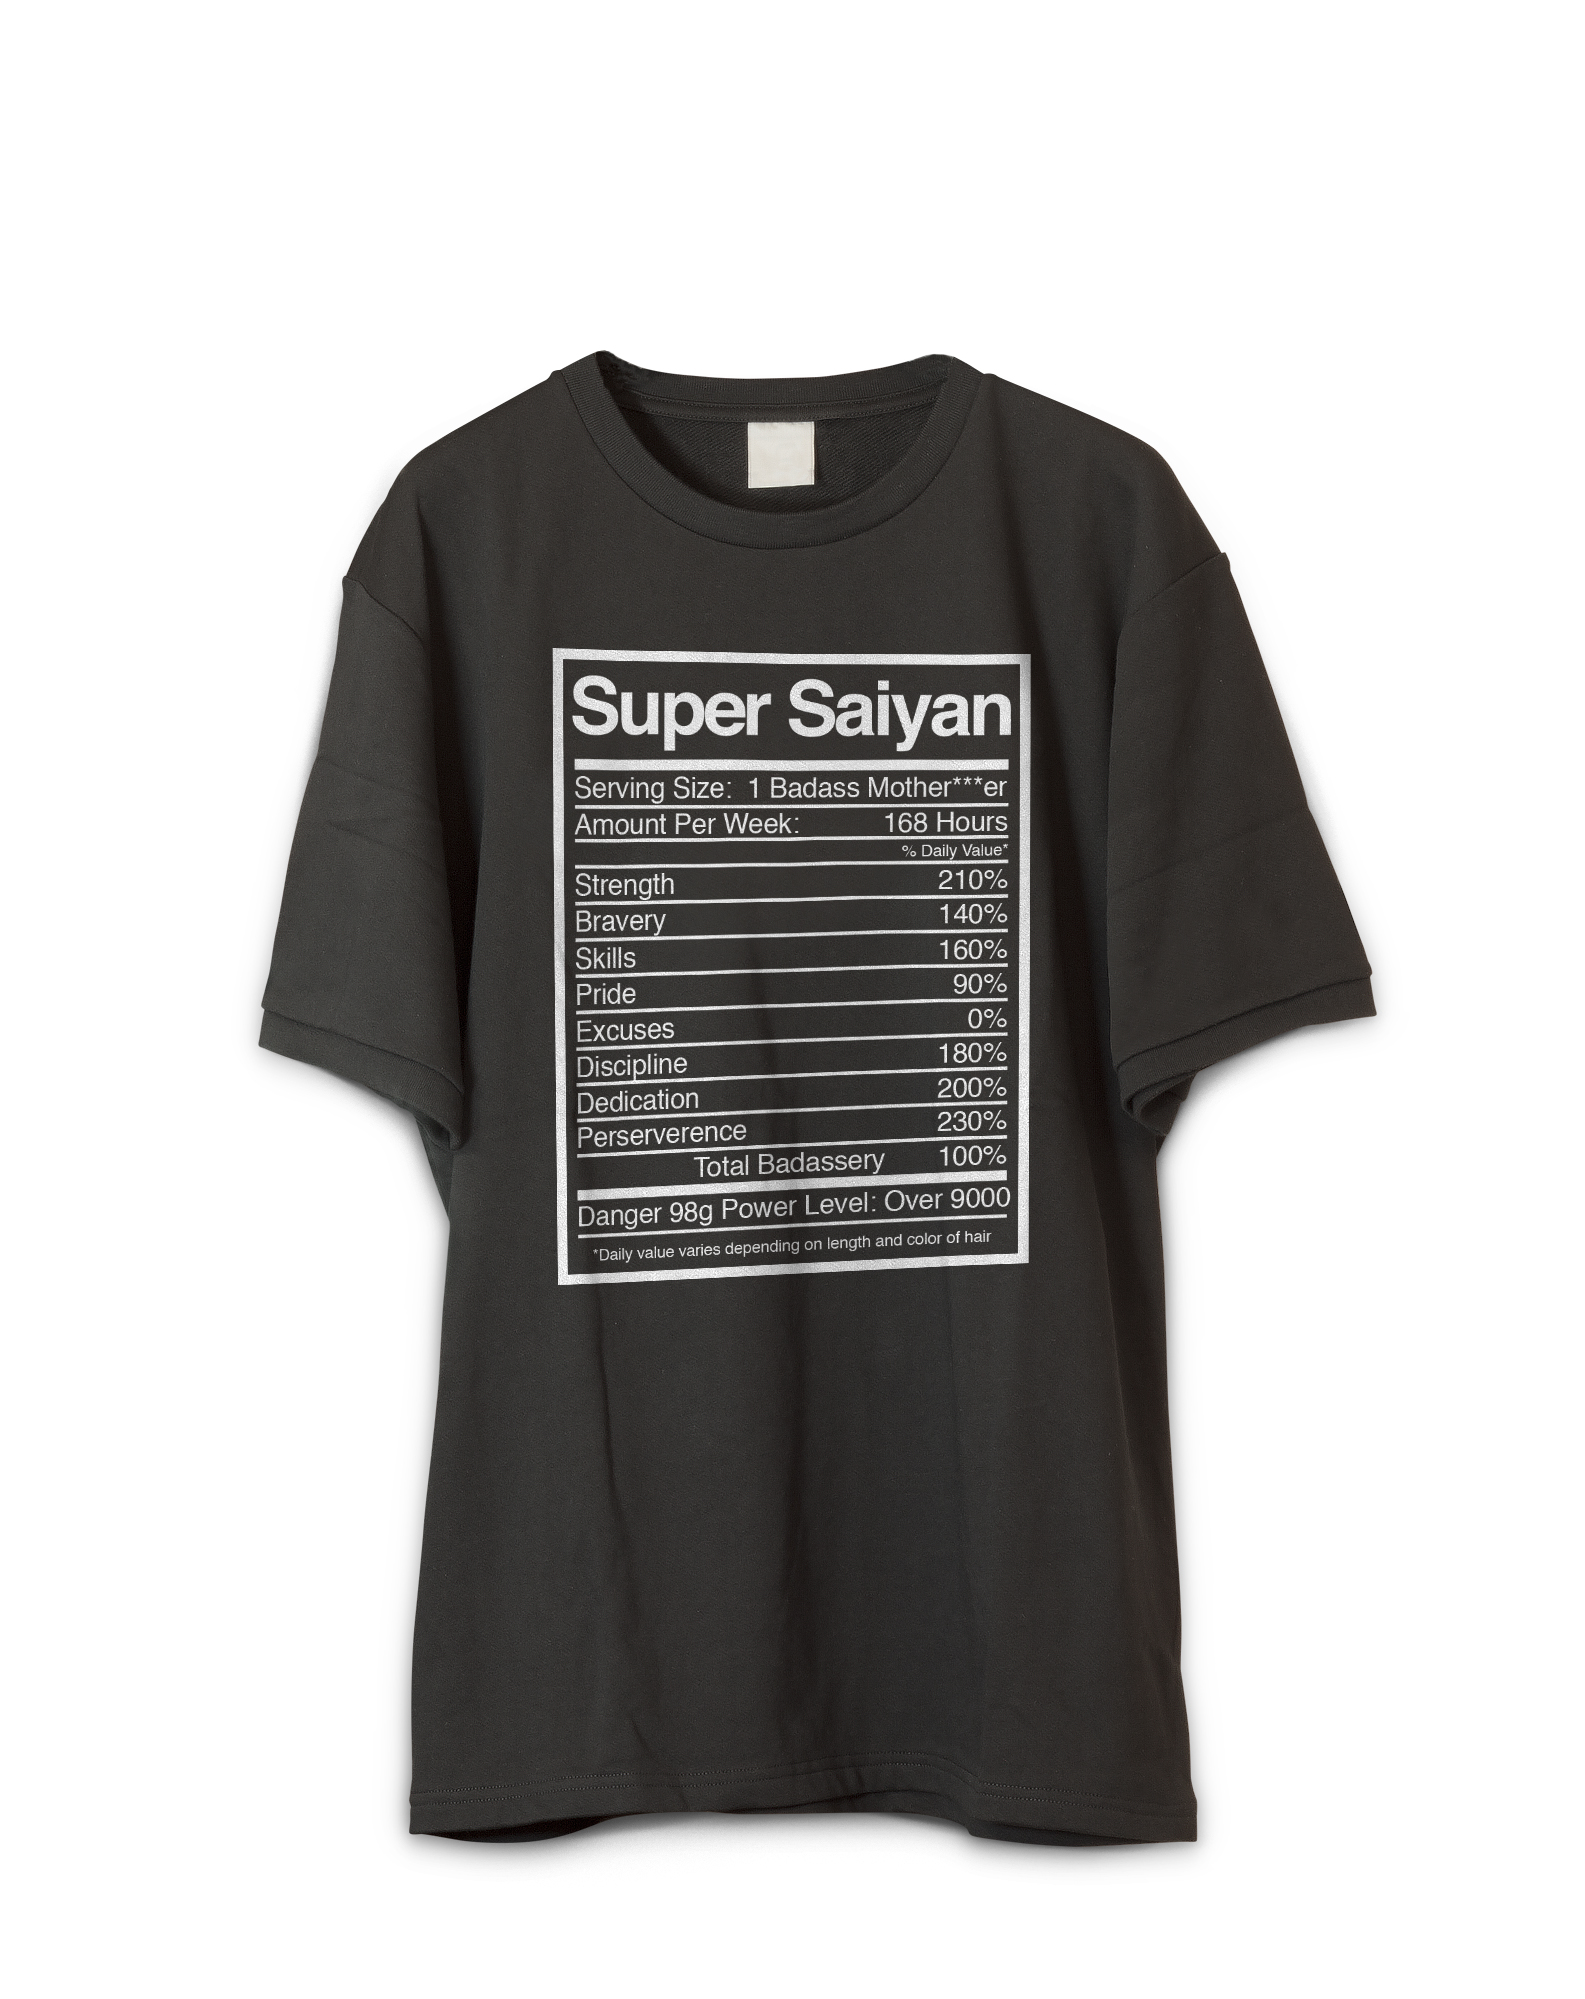 Super Saiyan Nutrition Label Funny Anime T-Shirt